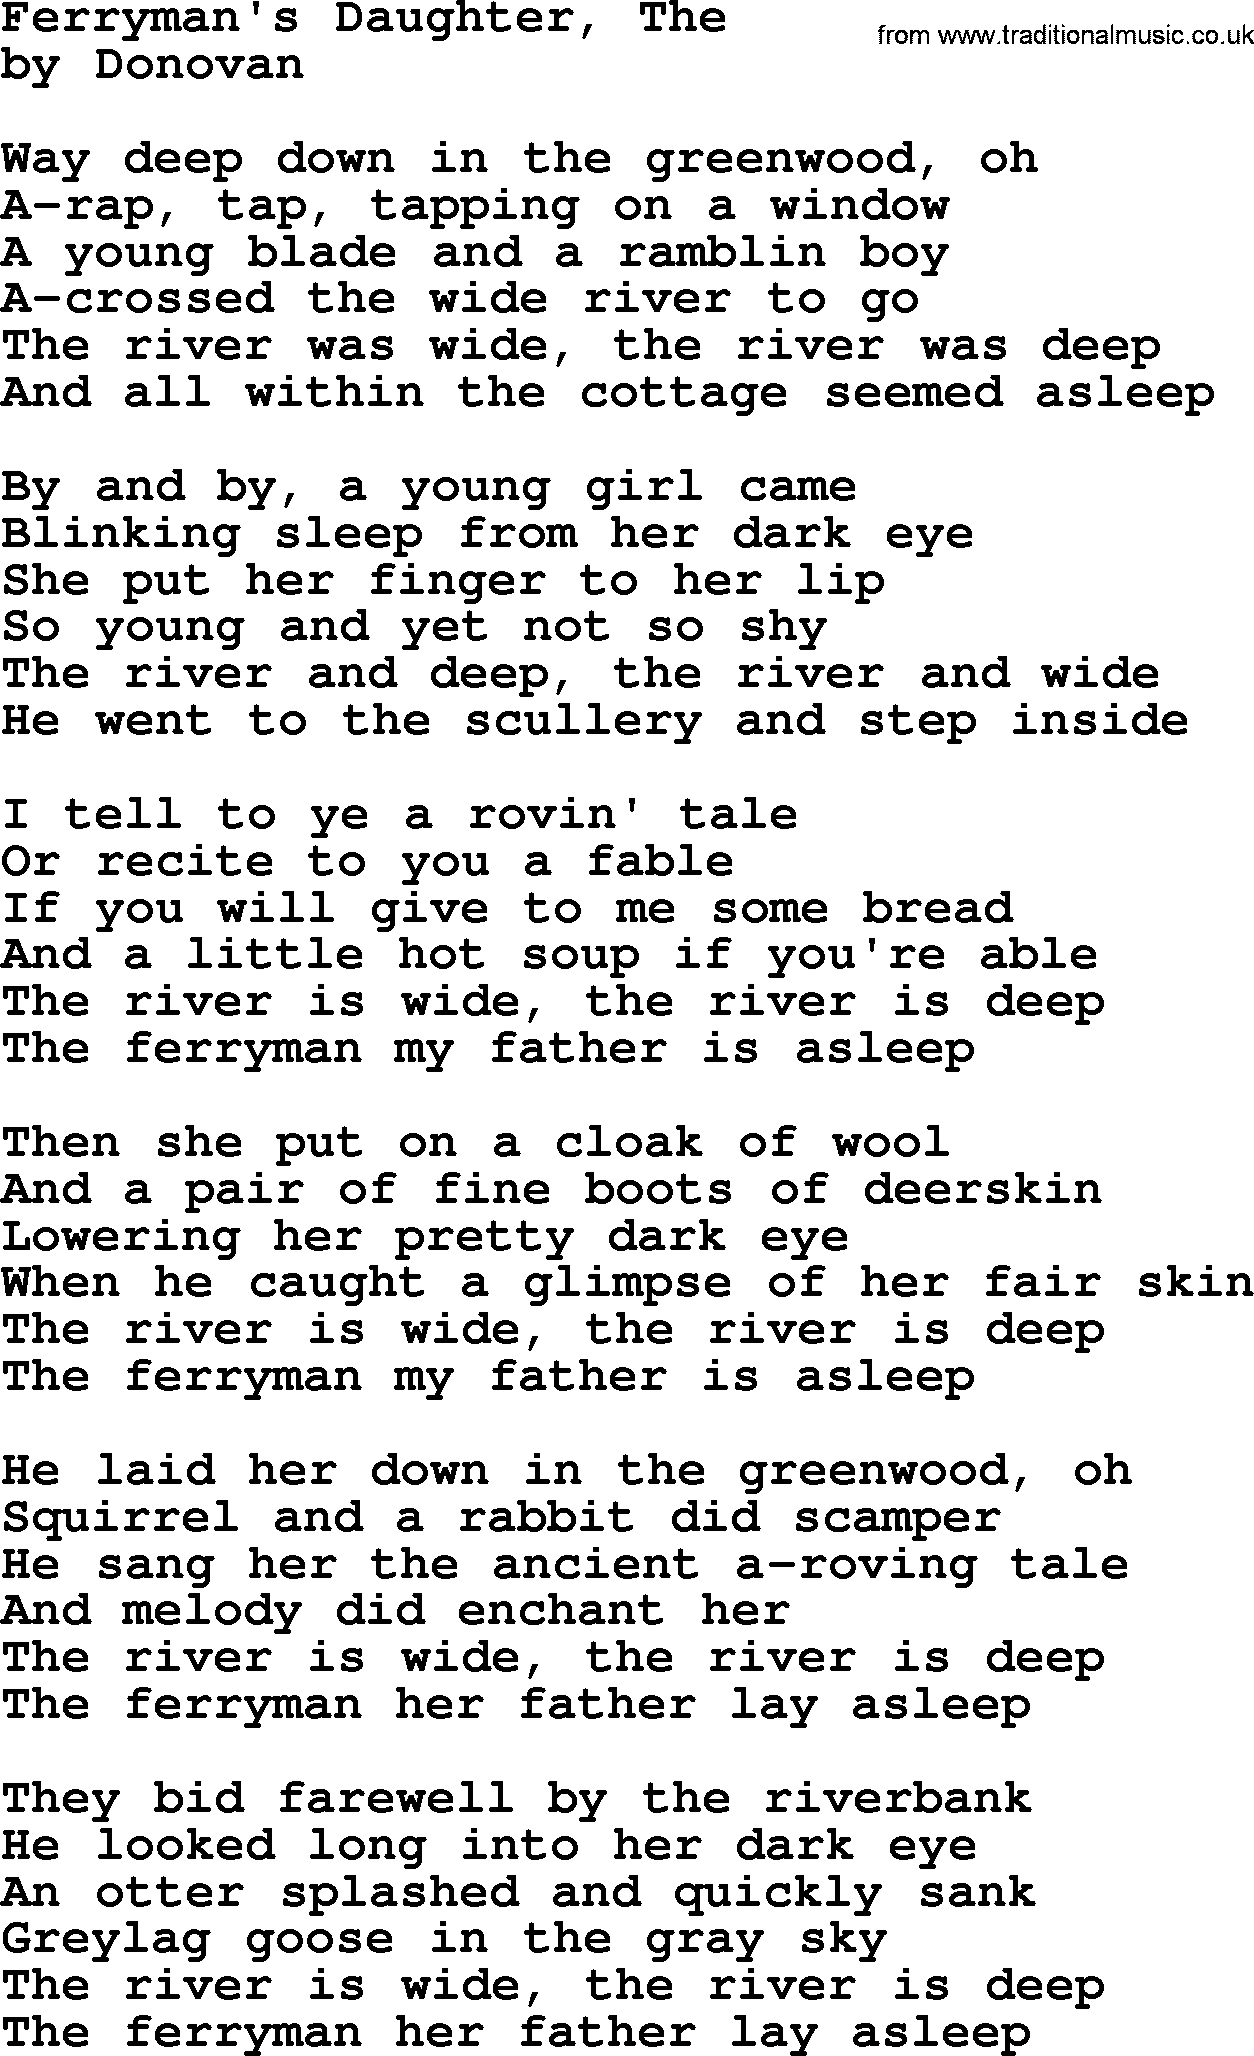 Donovan Leitch song: Ferryman's Daughter, The lyrics